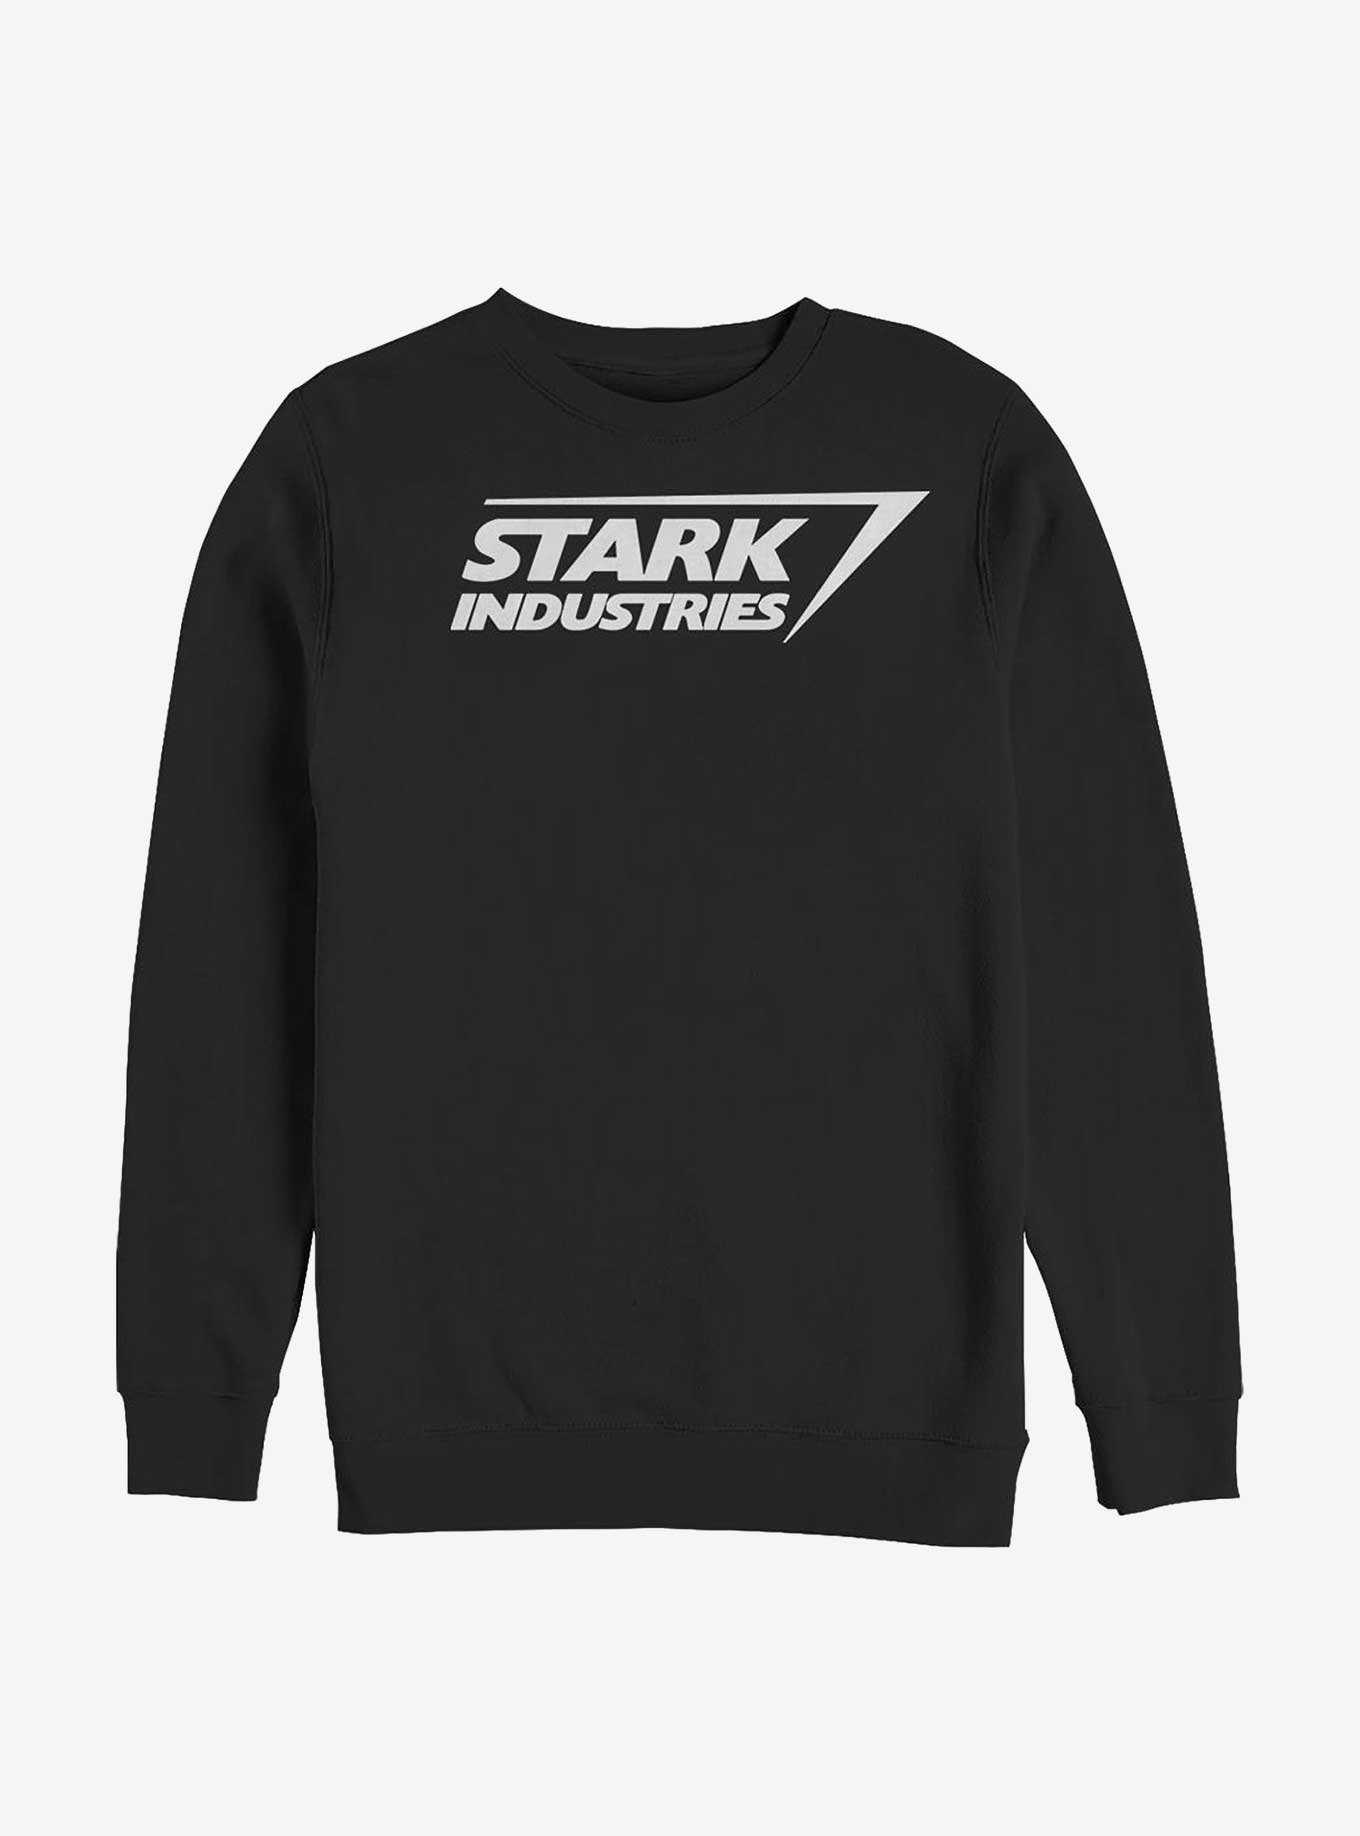 Marvel Iron Man Stark Industries Sweatshirt, , hi-res